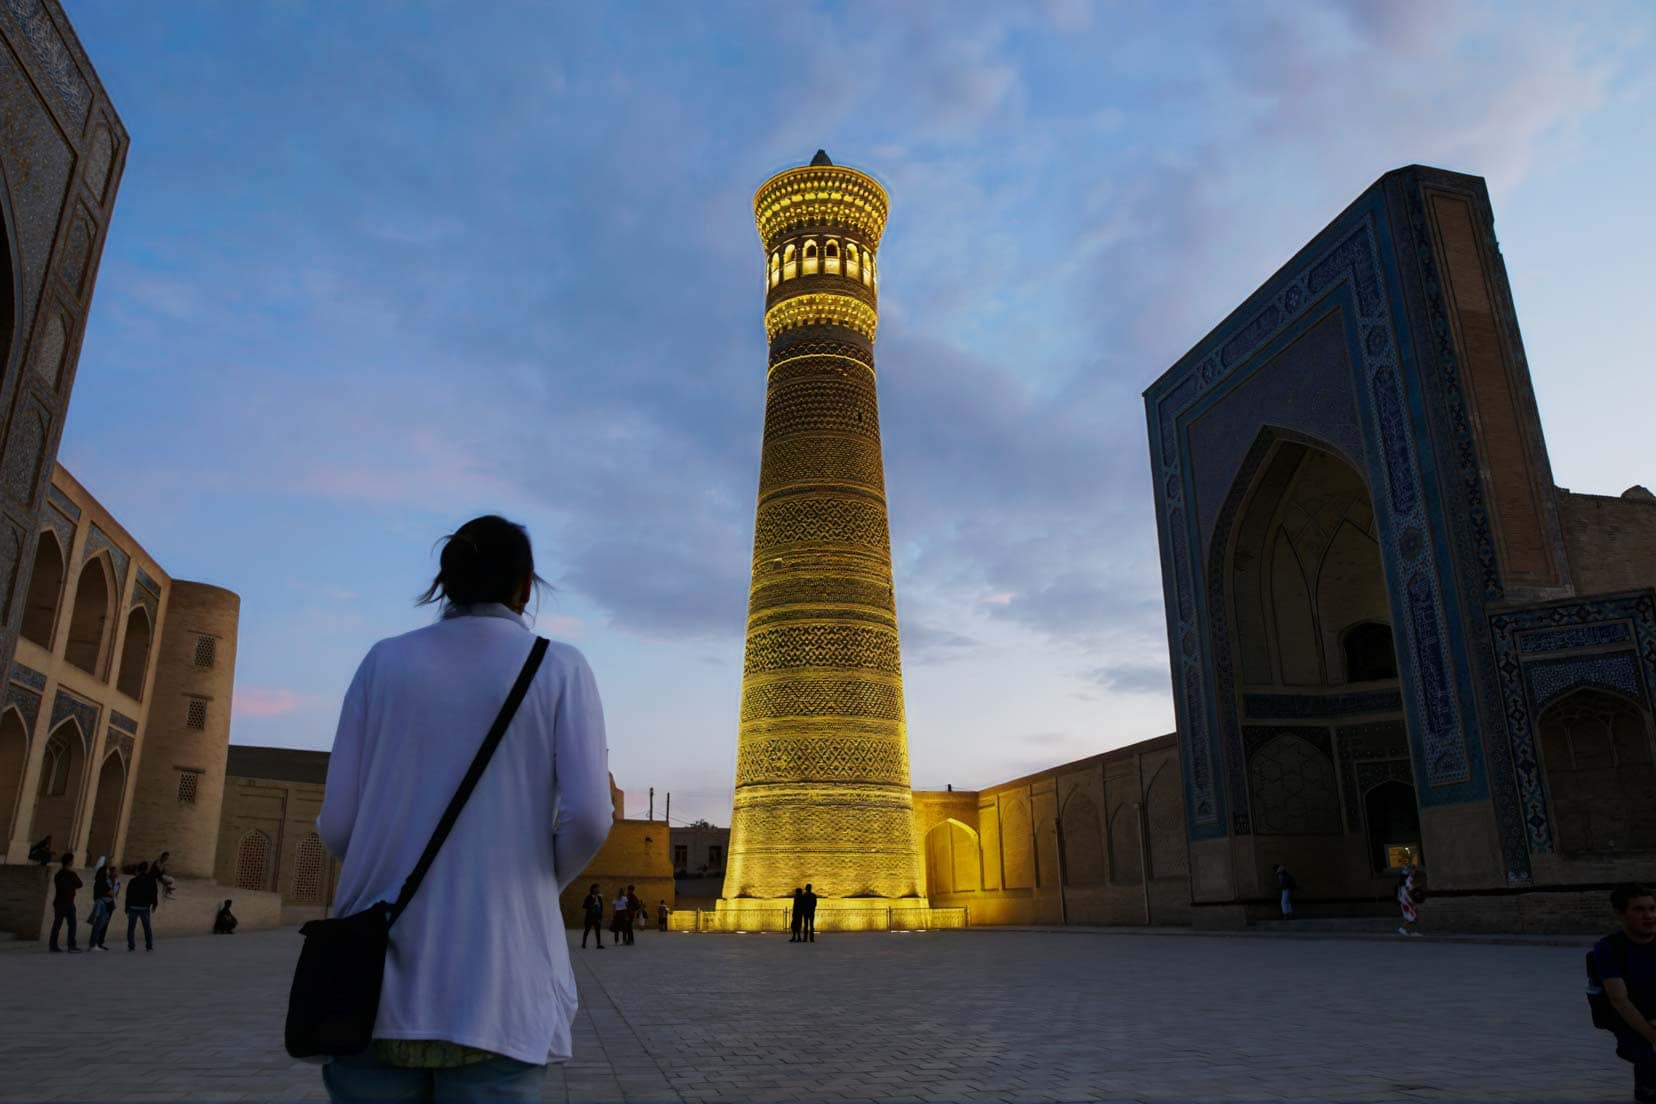 Shelley-wearing-black-pacsafe-handbag in Uzbekistan looking at a lit up tower 